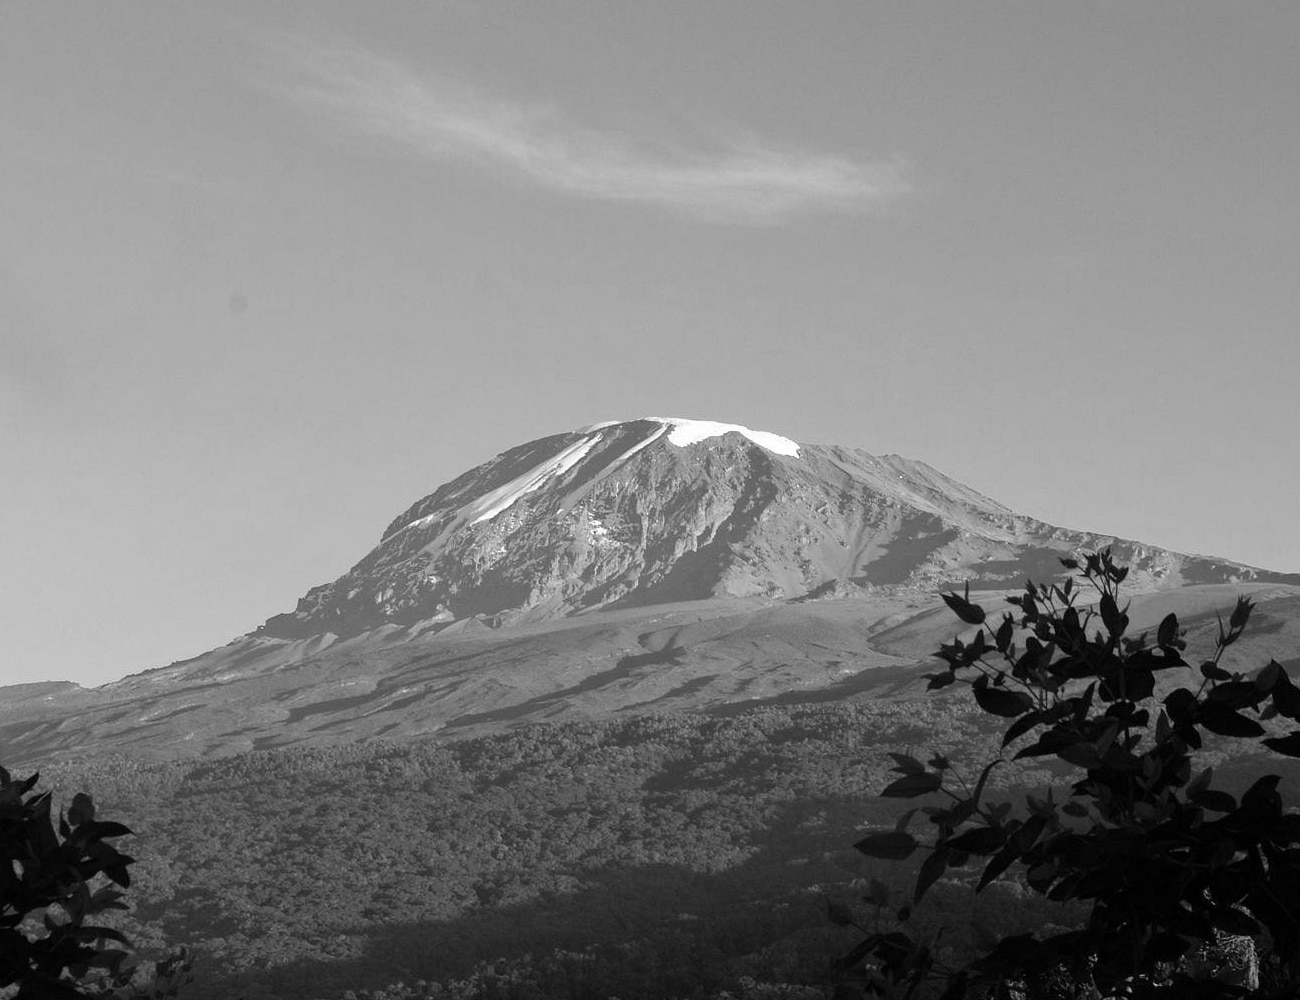 A View of Mount Kilimanjaro